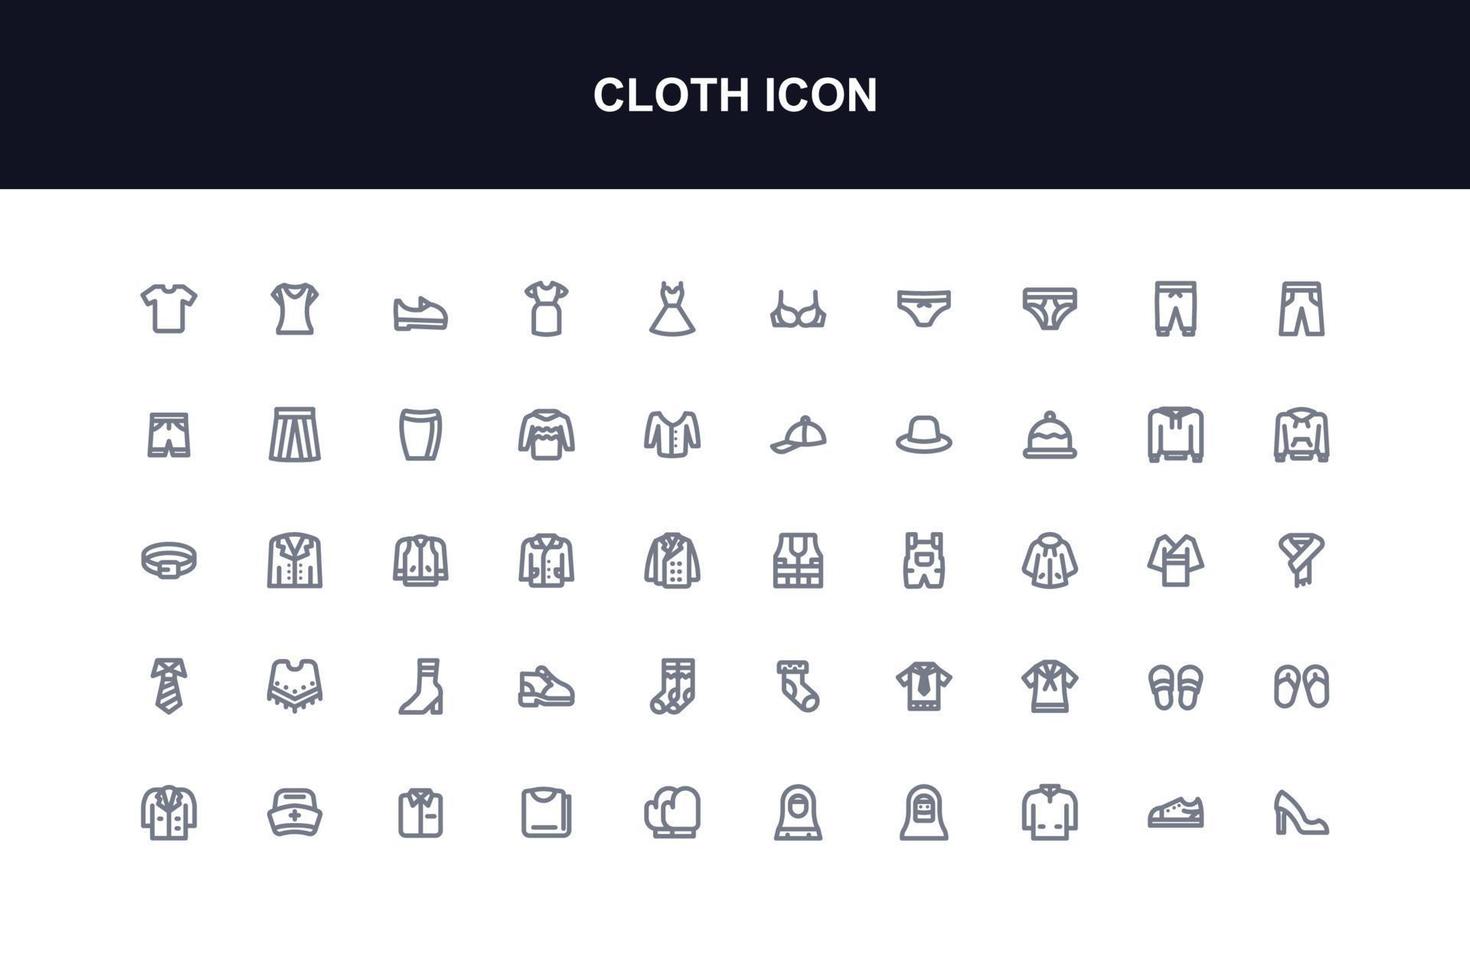 jeu d'icônes de vêtements complet de l'application vecteur